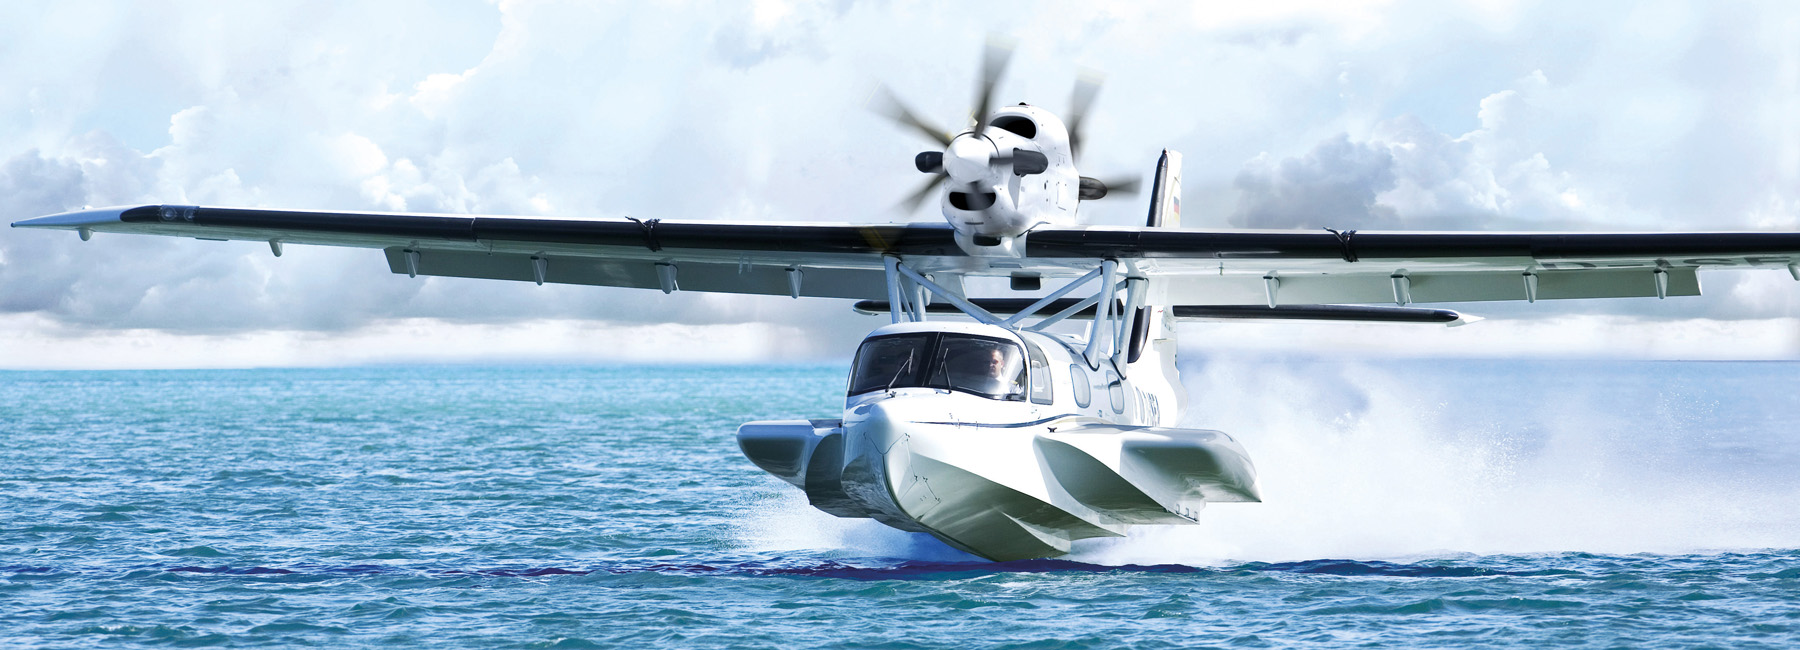 dornier-seastar-amphibious-aircraft-designboom-header.jpg